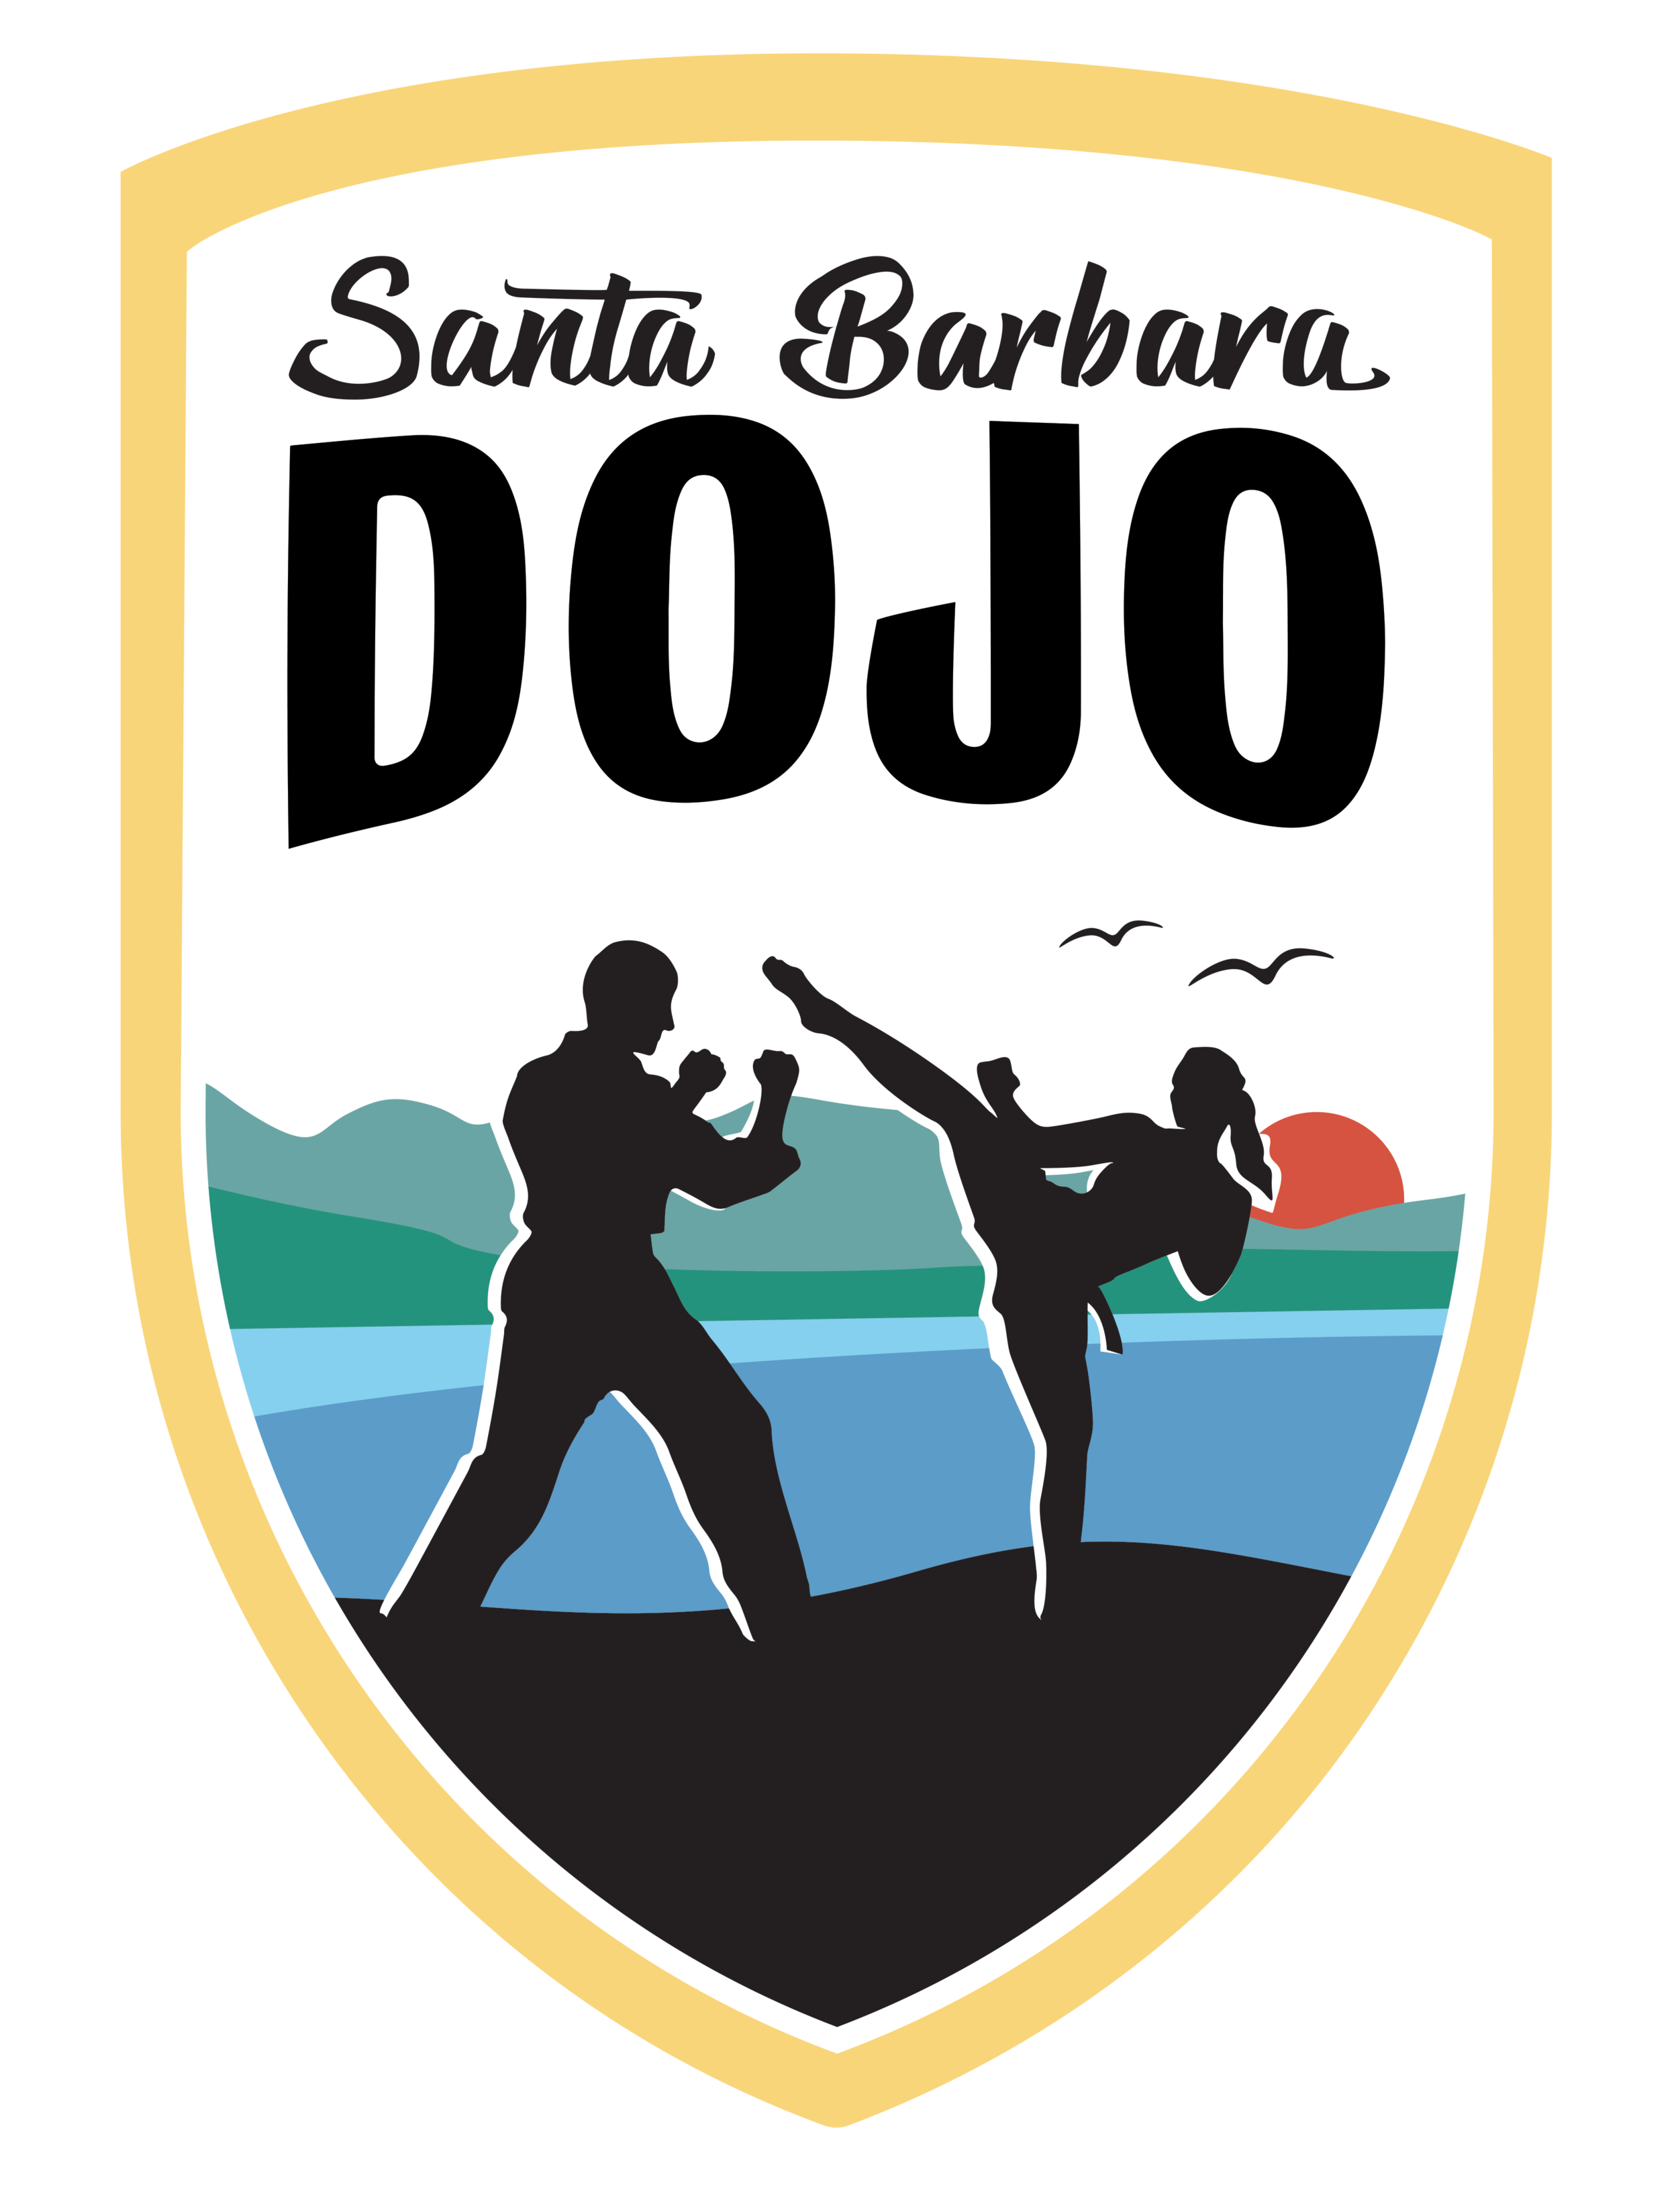 Santa Barbara Dojo - Fitness &amp; Martial Arts Classes for the whole family